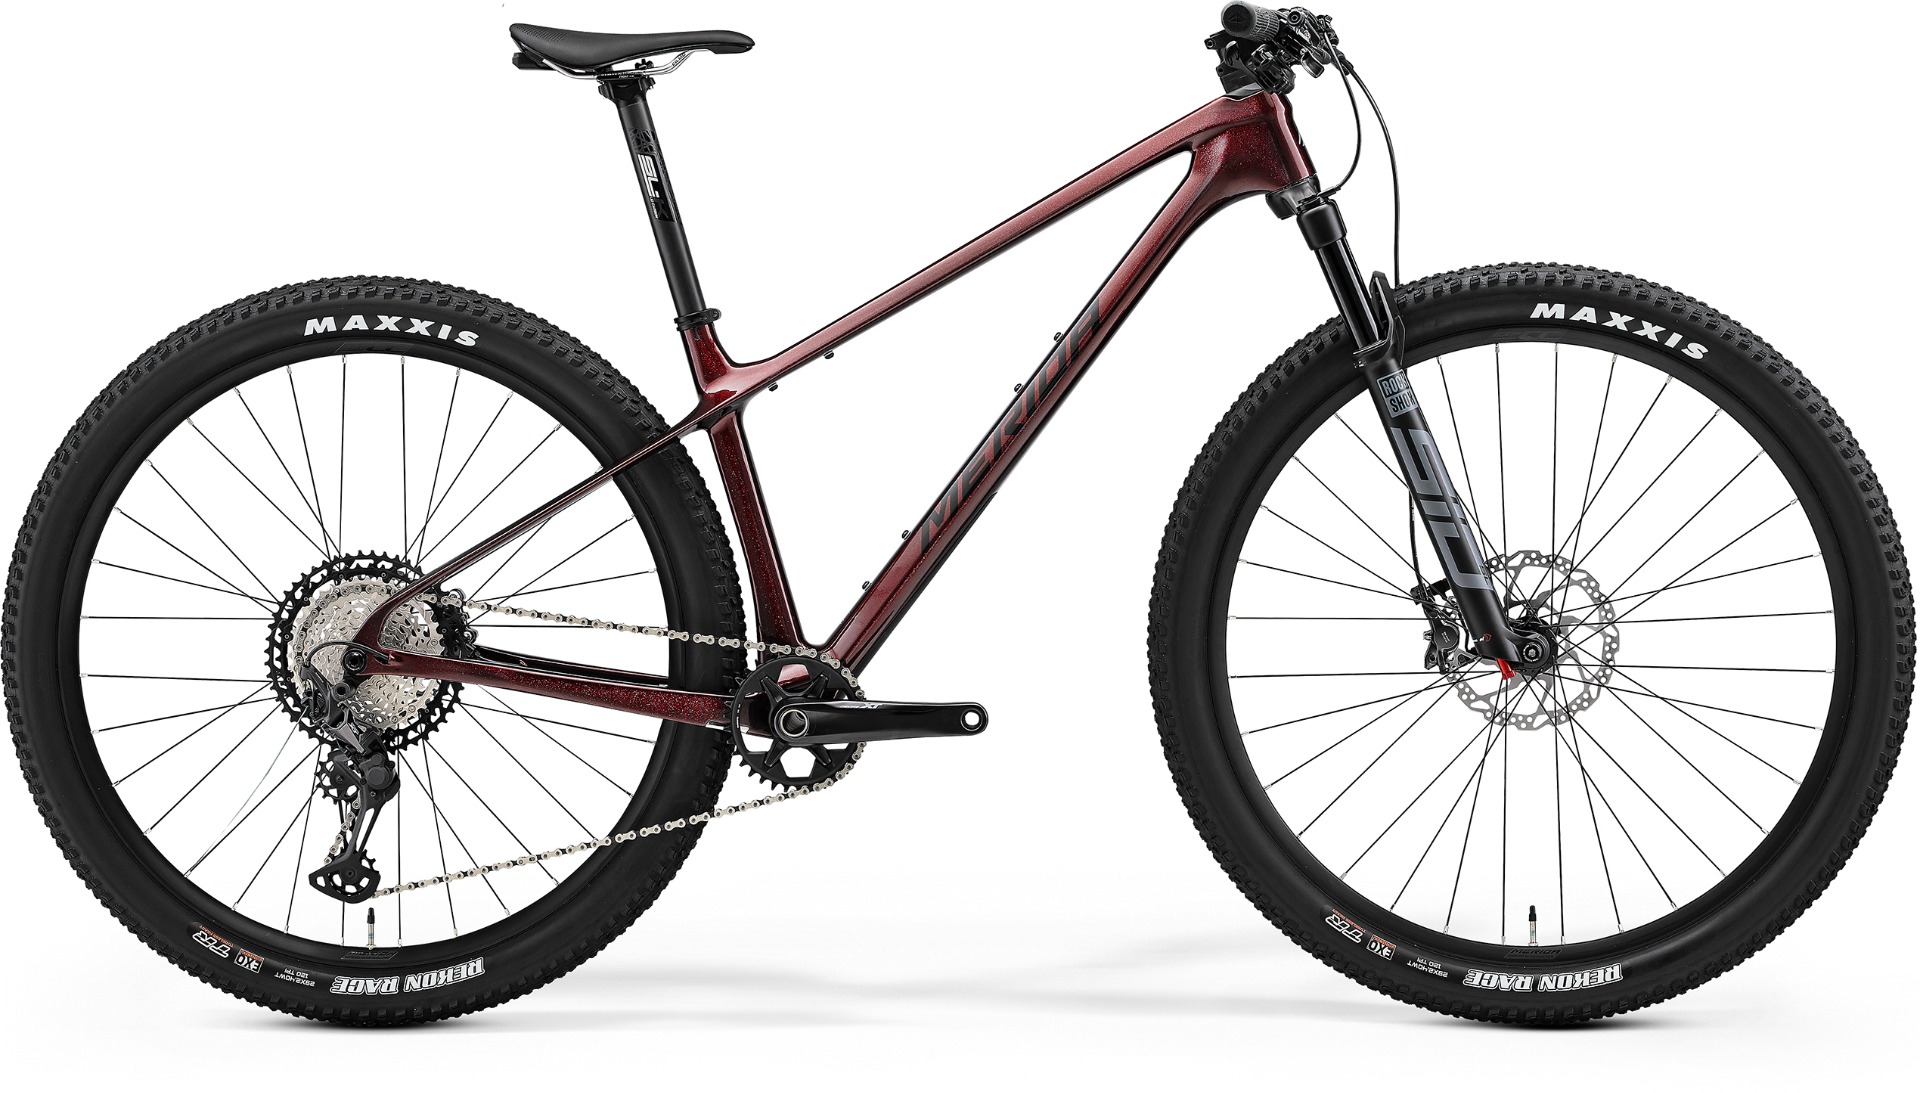 Bicycle Merida BIG.NINE XT III1 BURGUNDY RED(BLACK/SILVER)